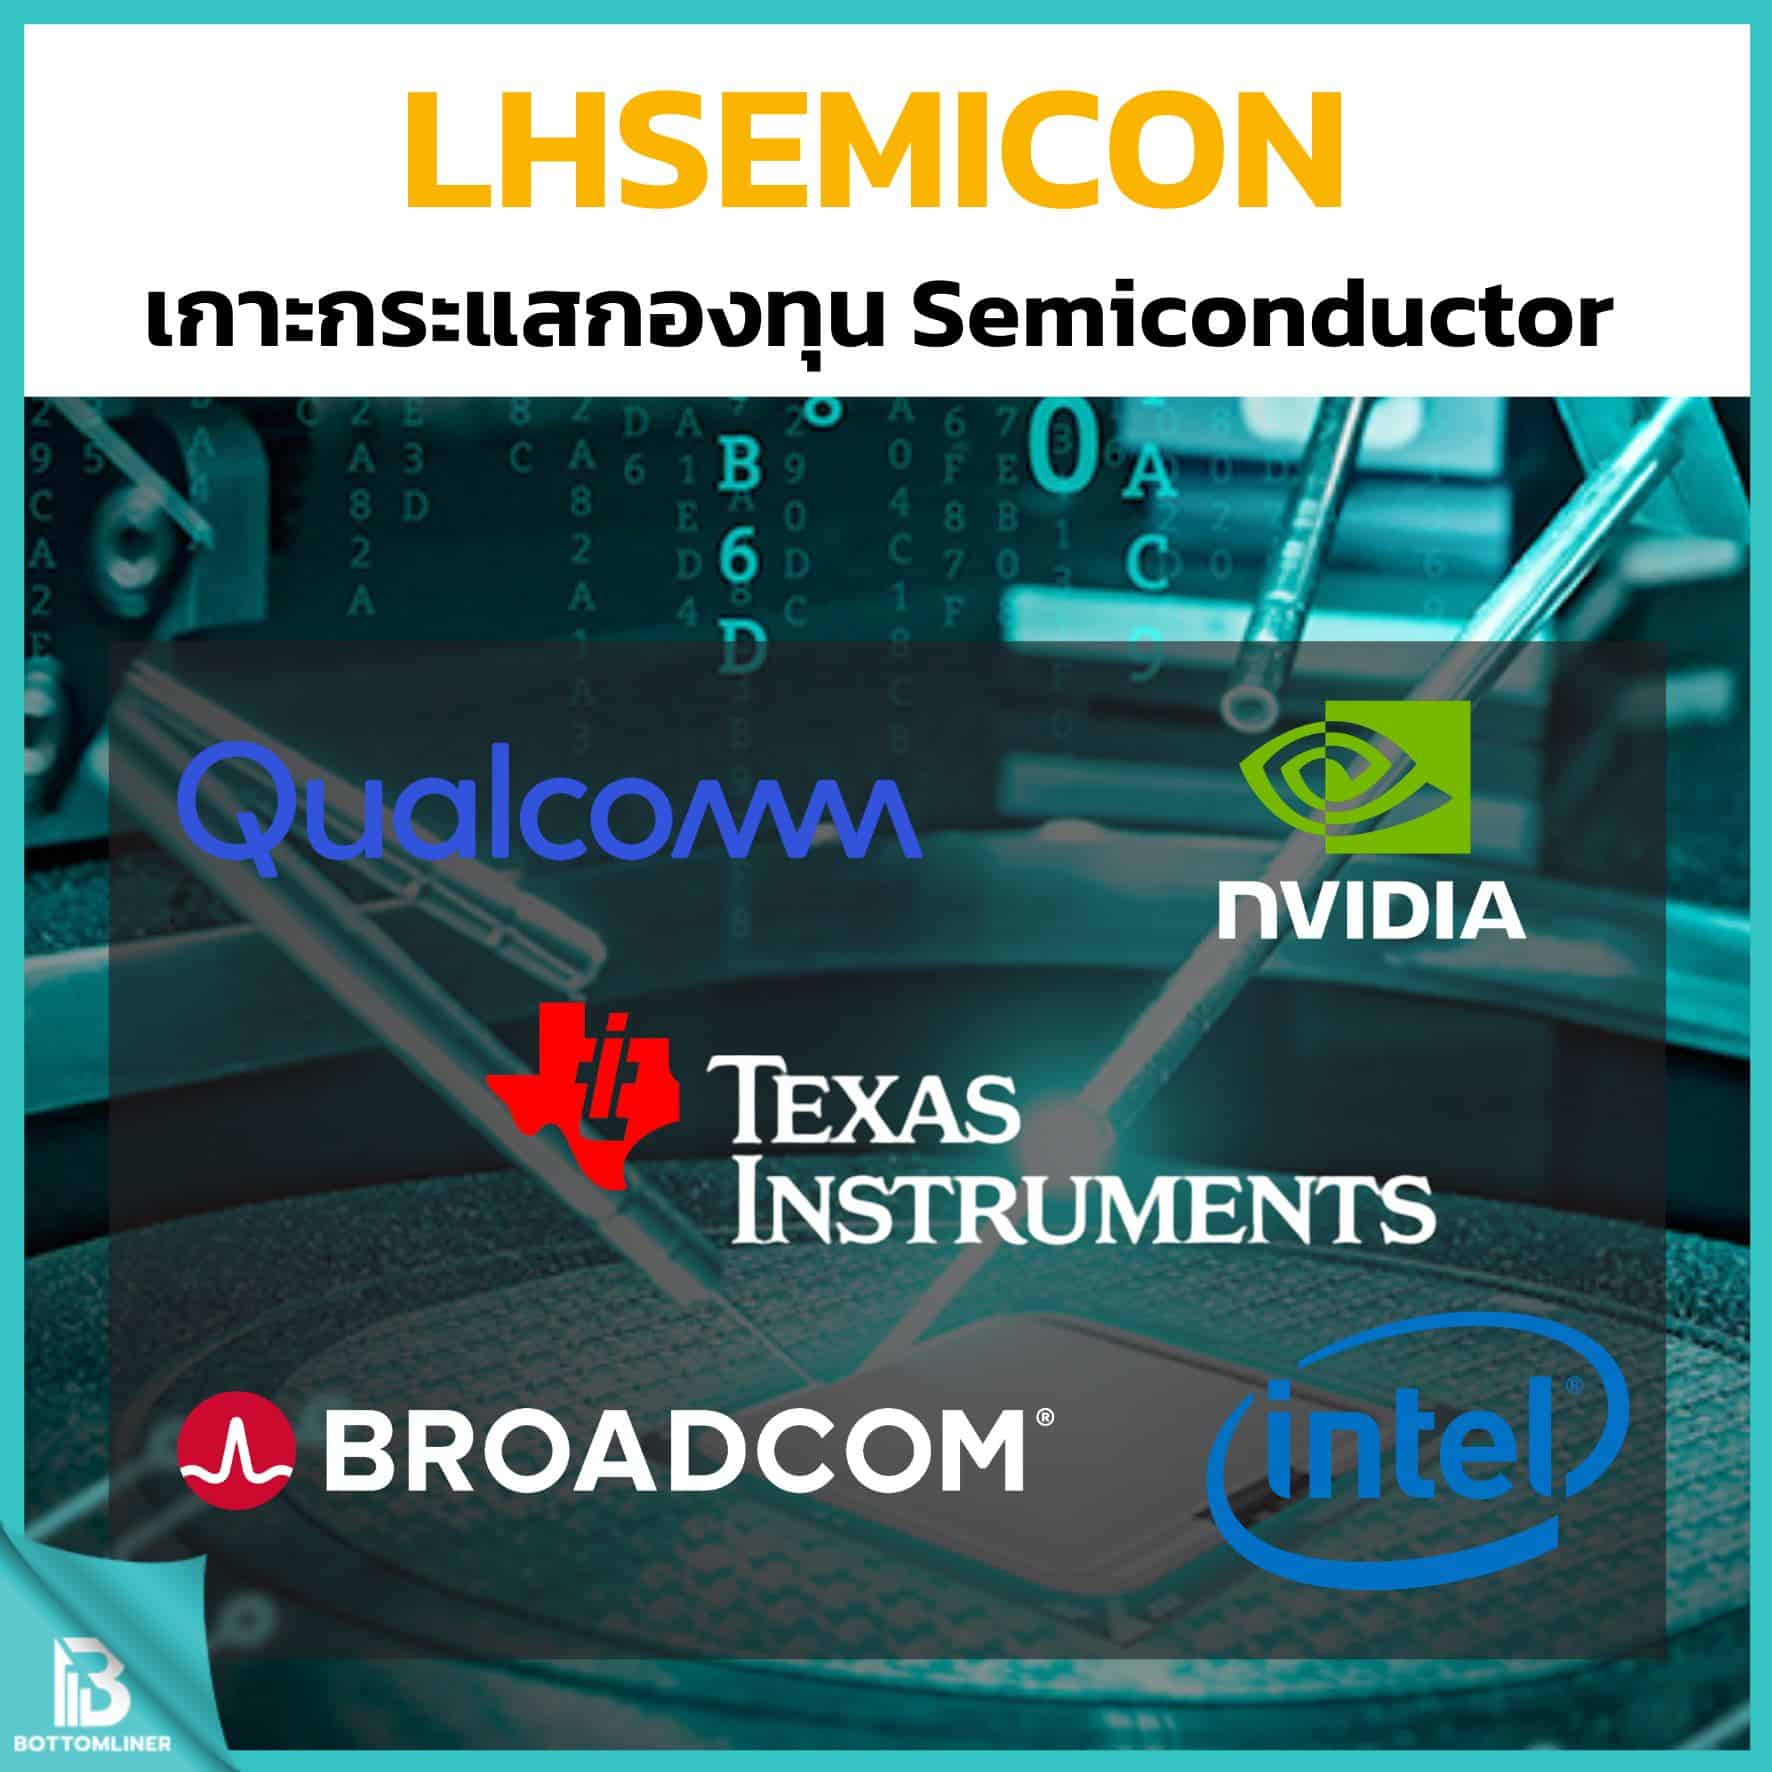 LH-Semiconductor เกาะกระแสกองทุน Semiconductor